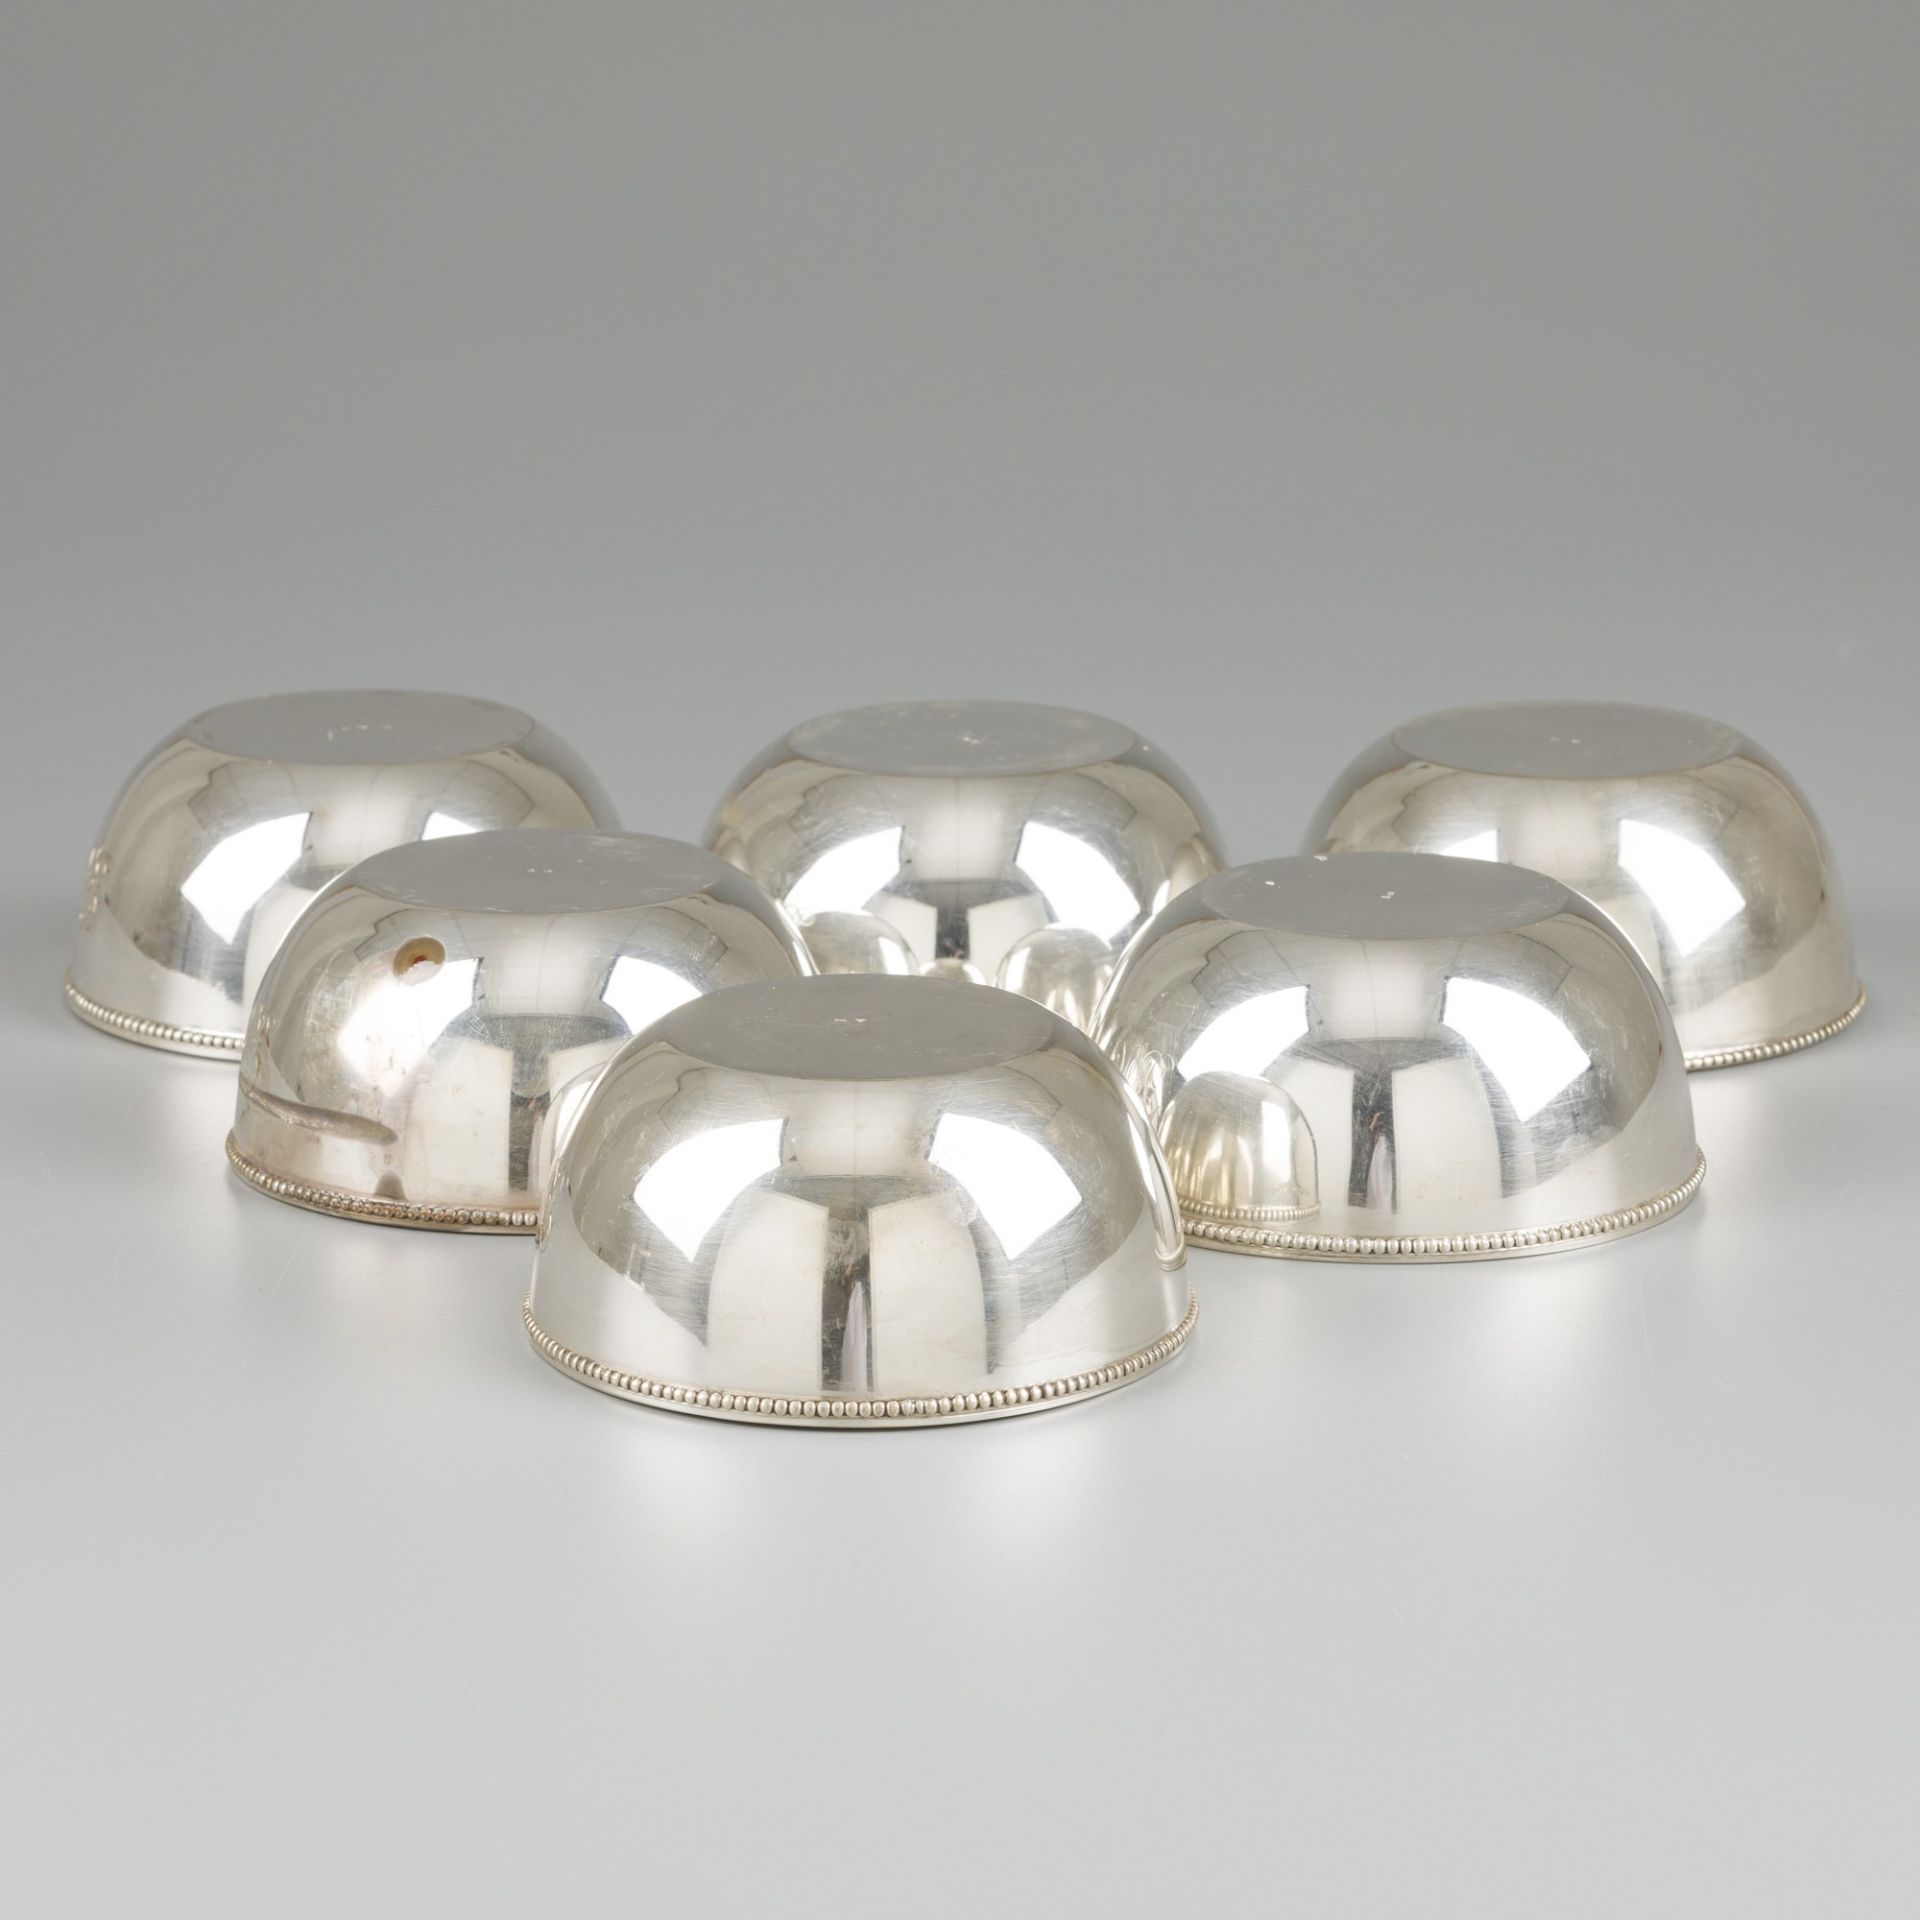 6-piece set of finger bowls silver. - Image 3 of 6